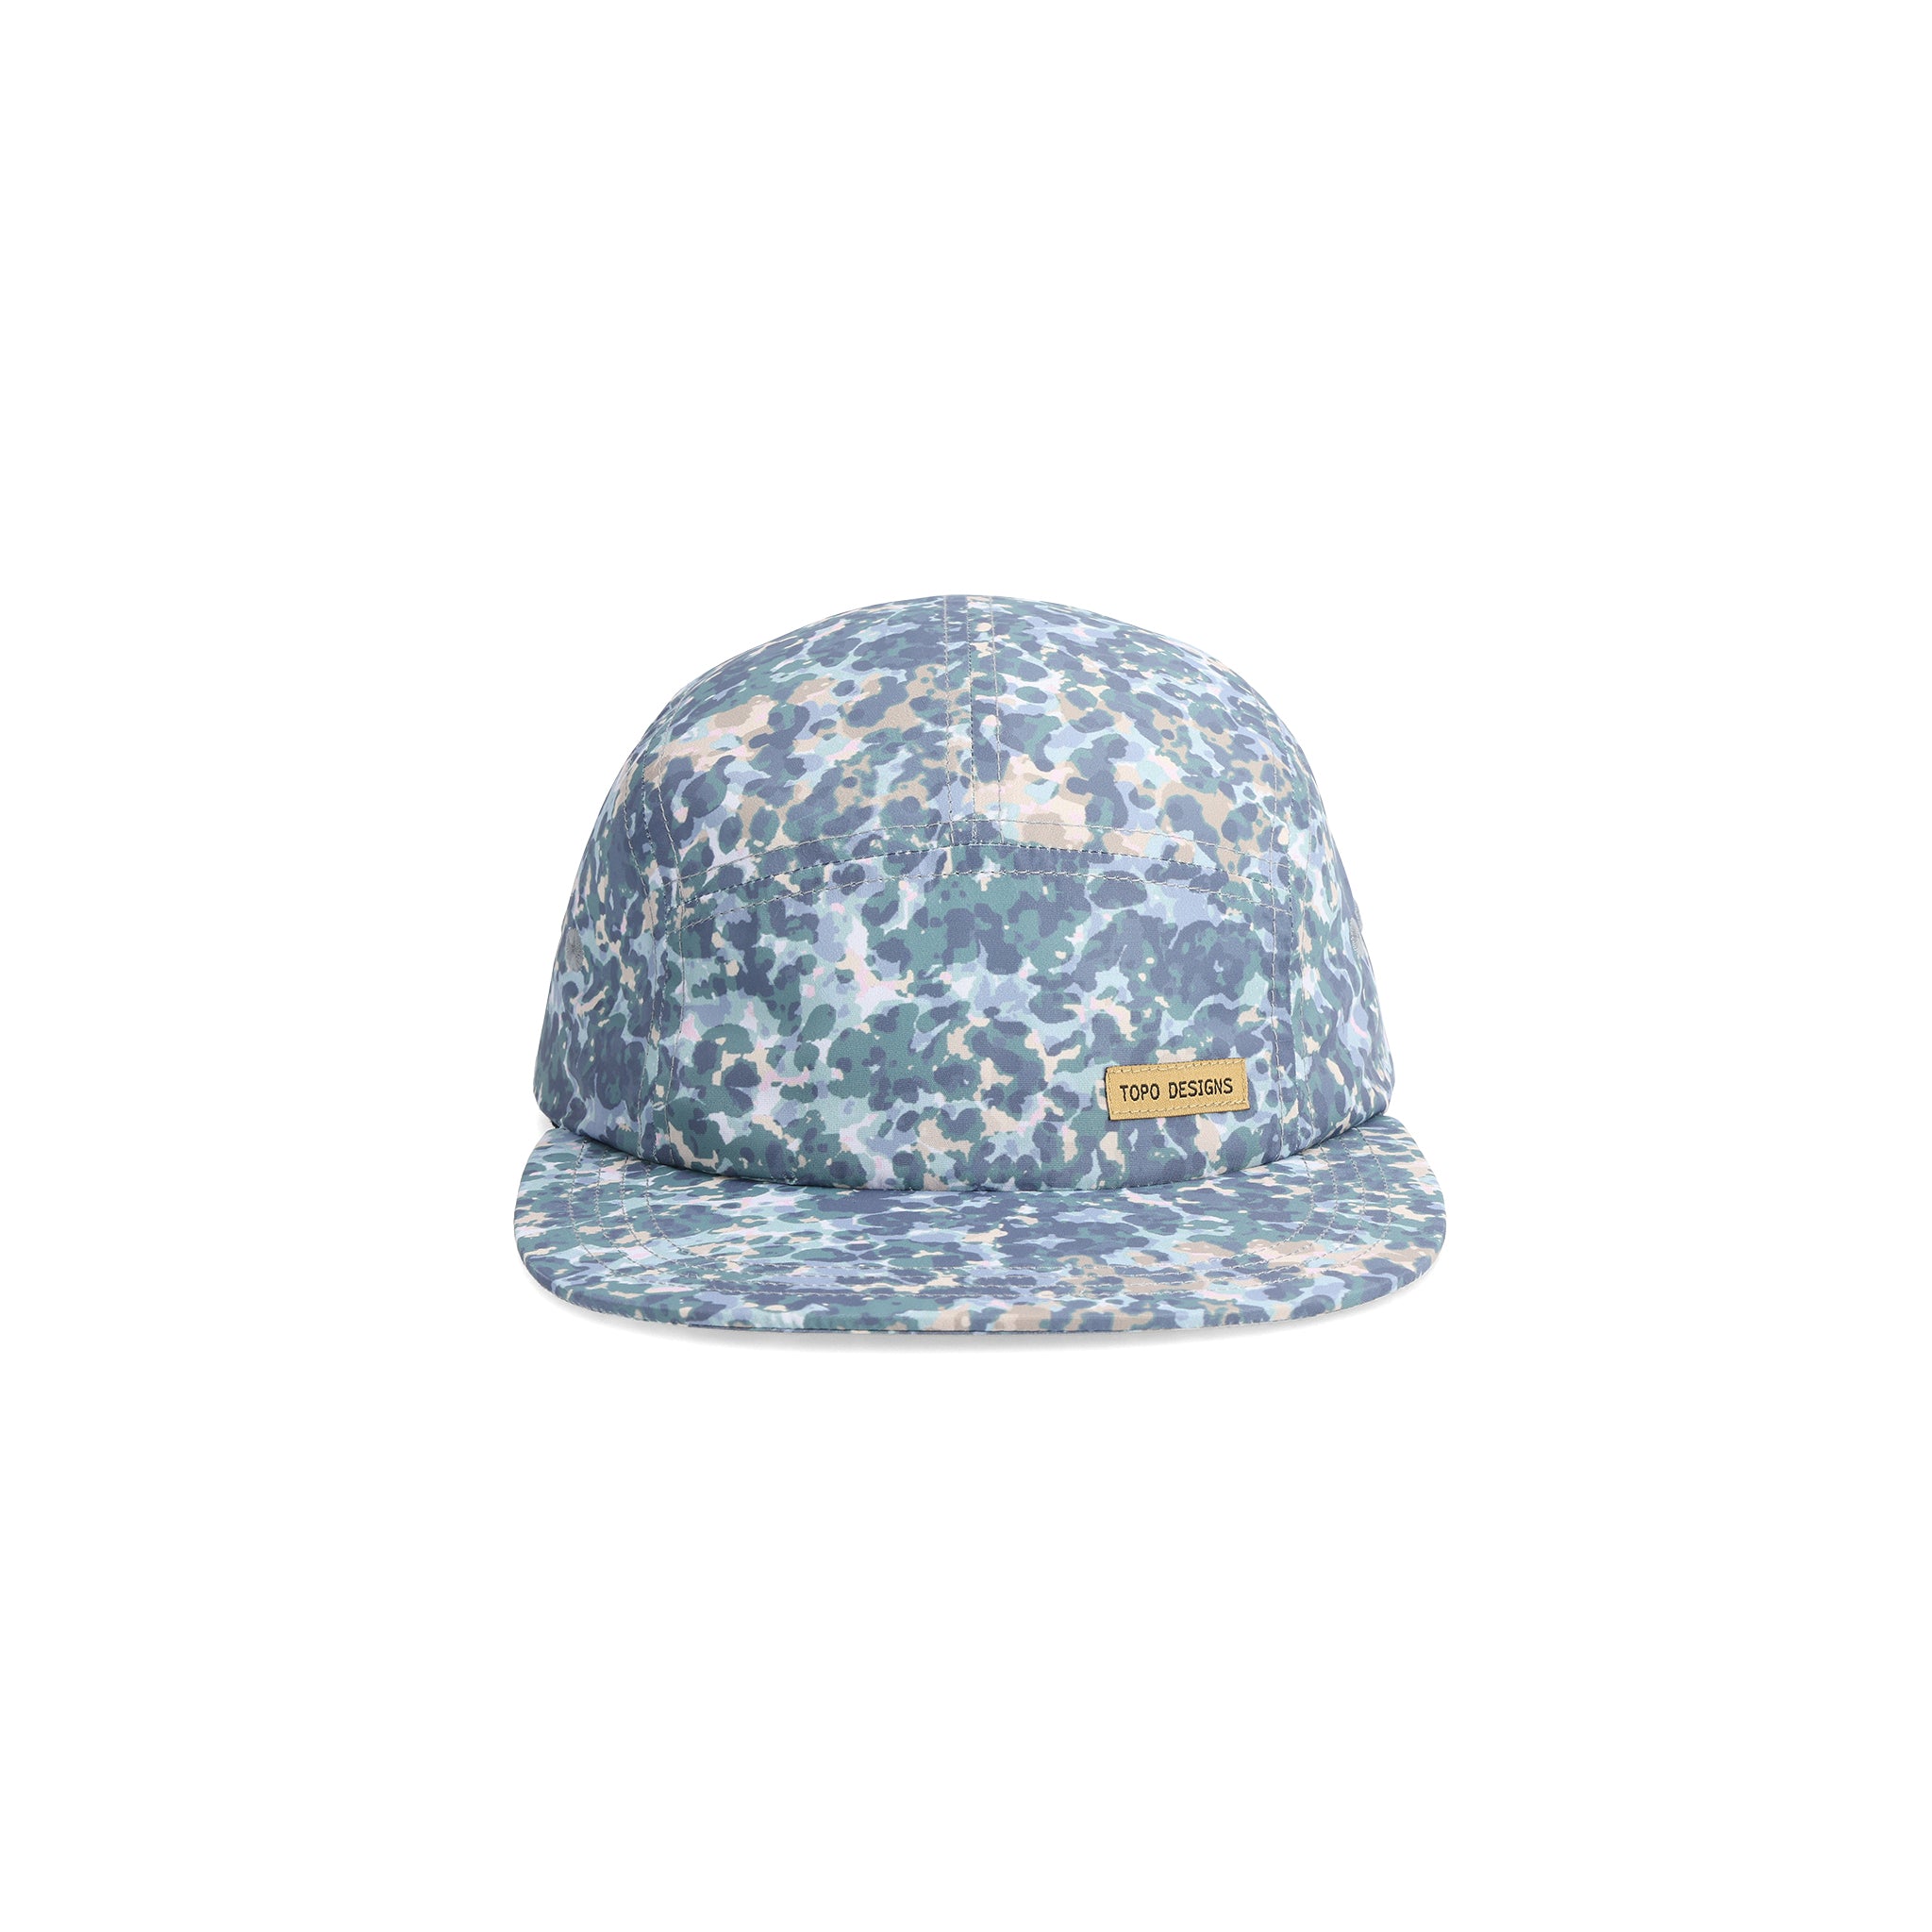 Nylon Camp Hat